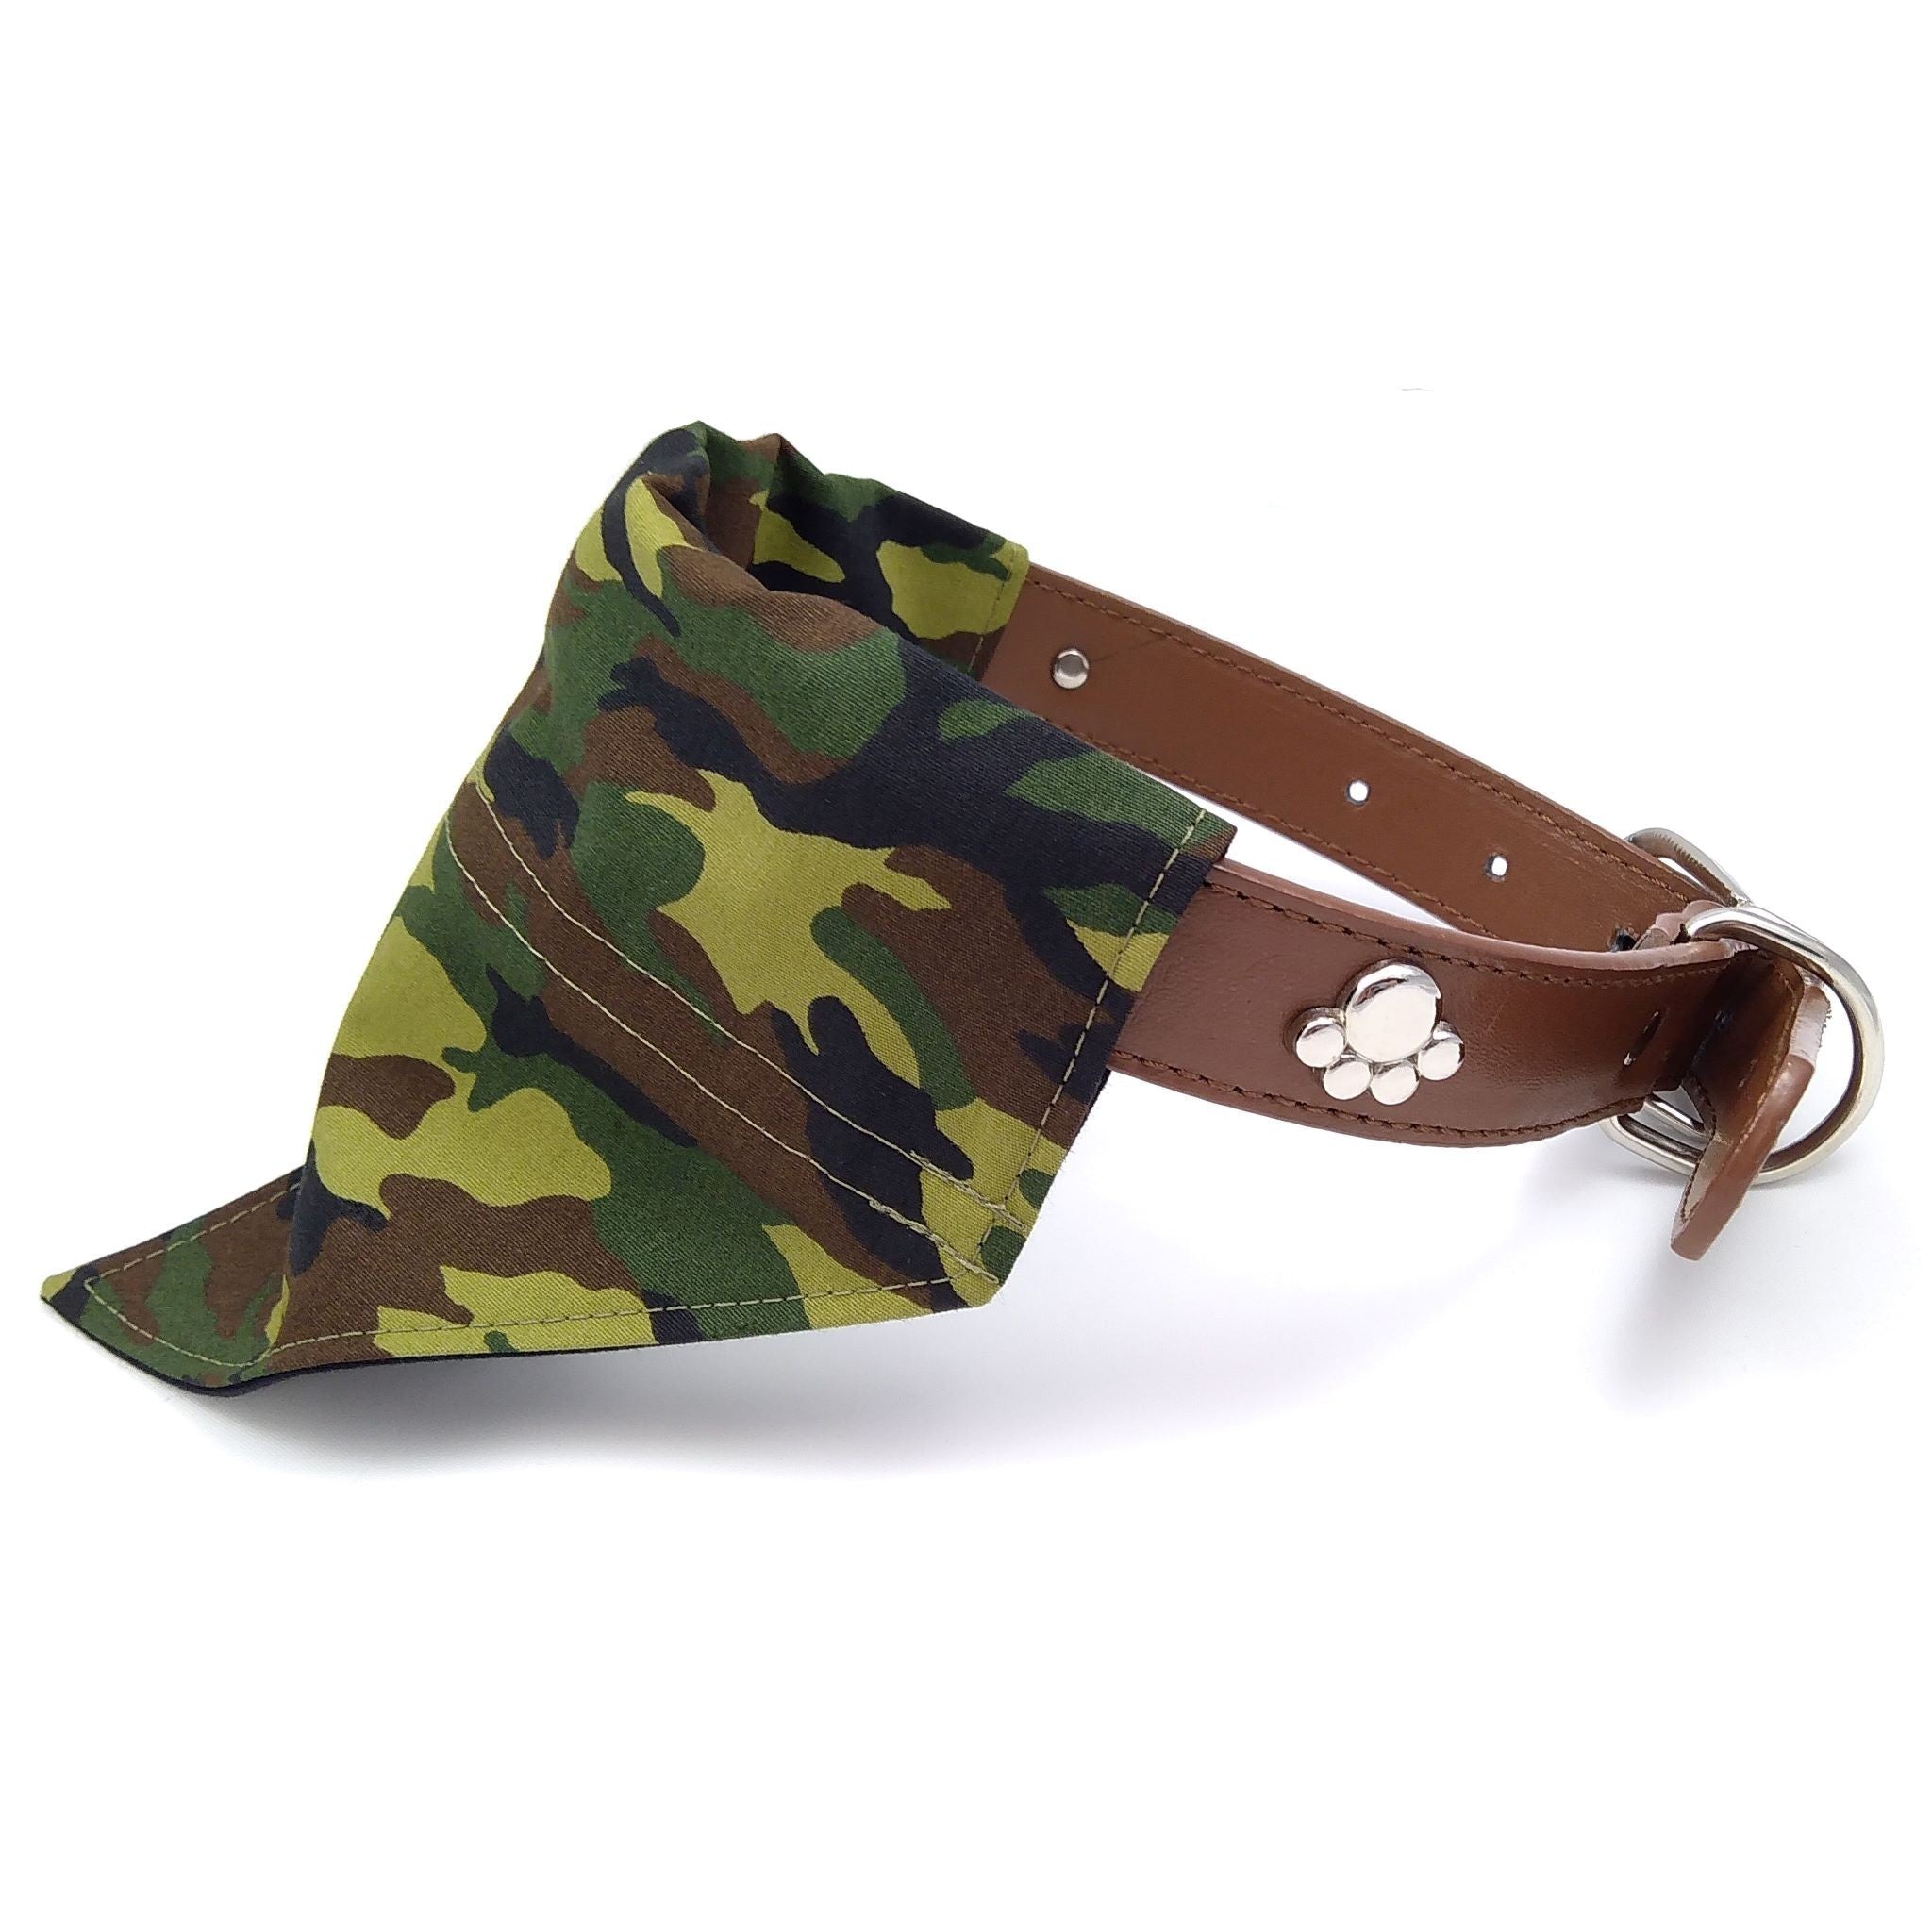 Camouflage dog neckerchief on dog collar